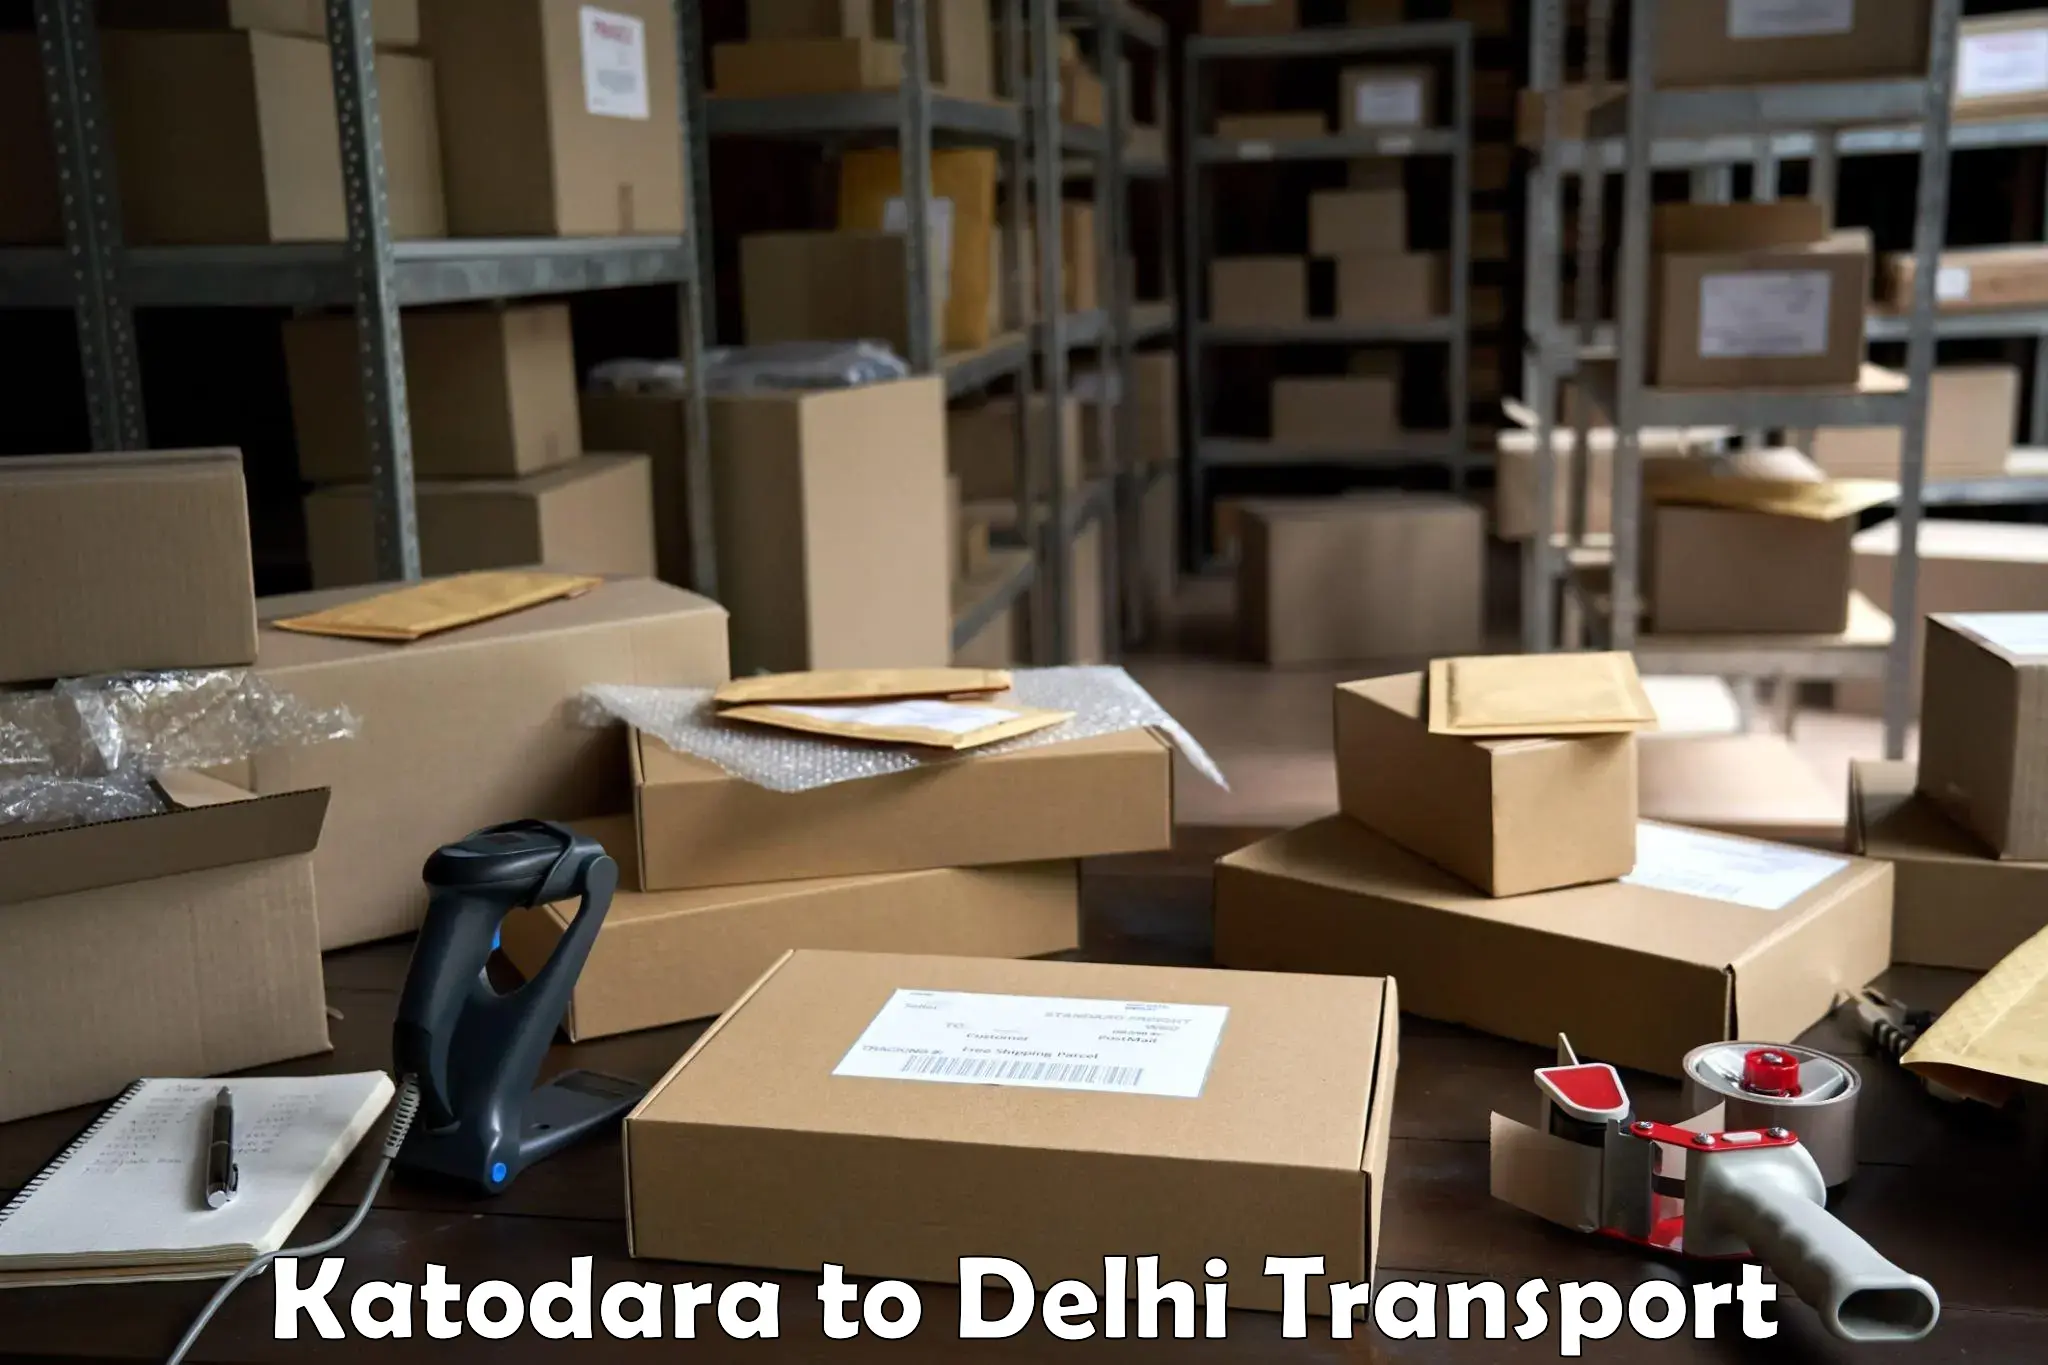 Truck transport companies in India Katodara to Lodhi Road